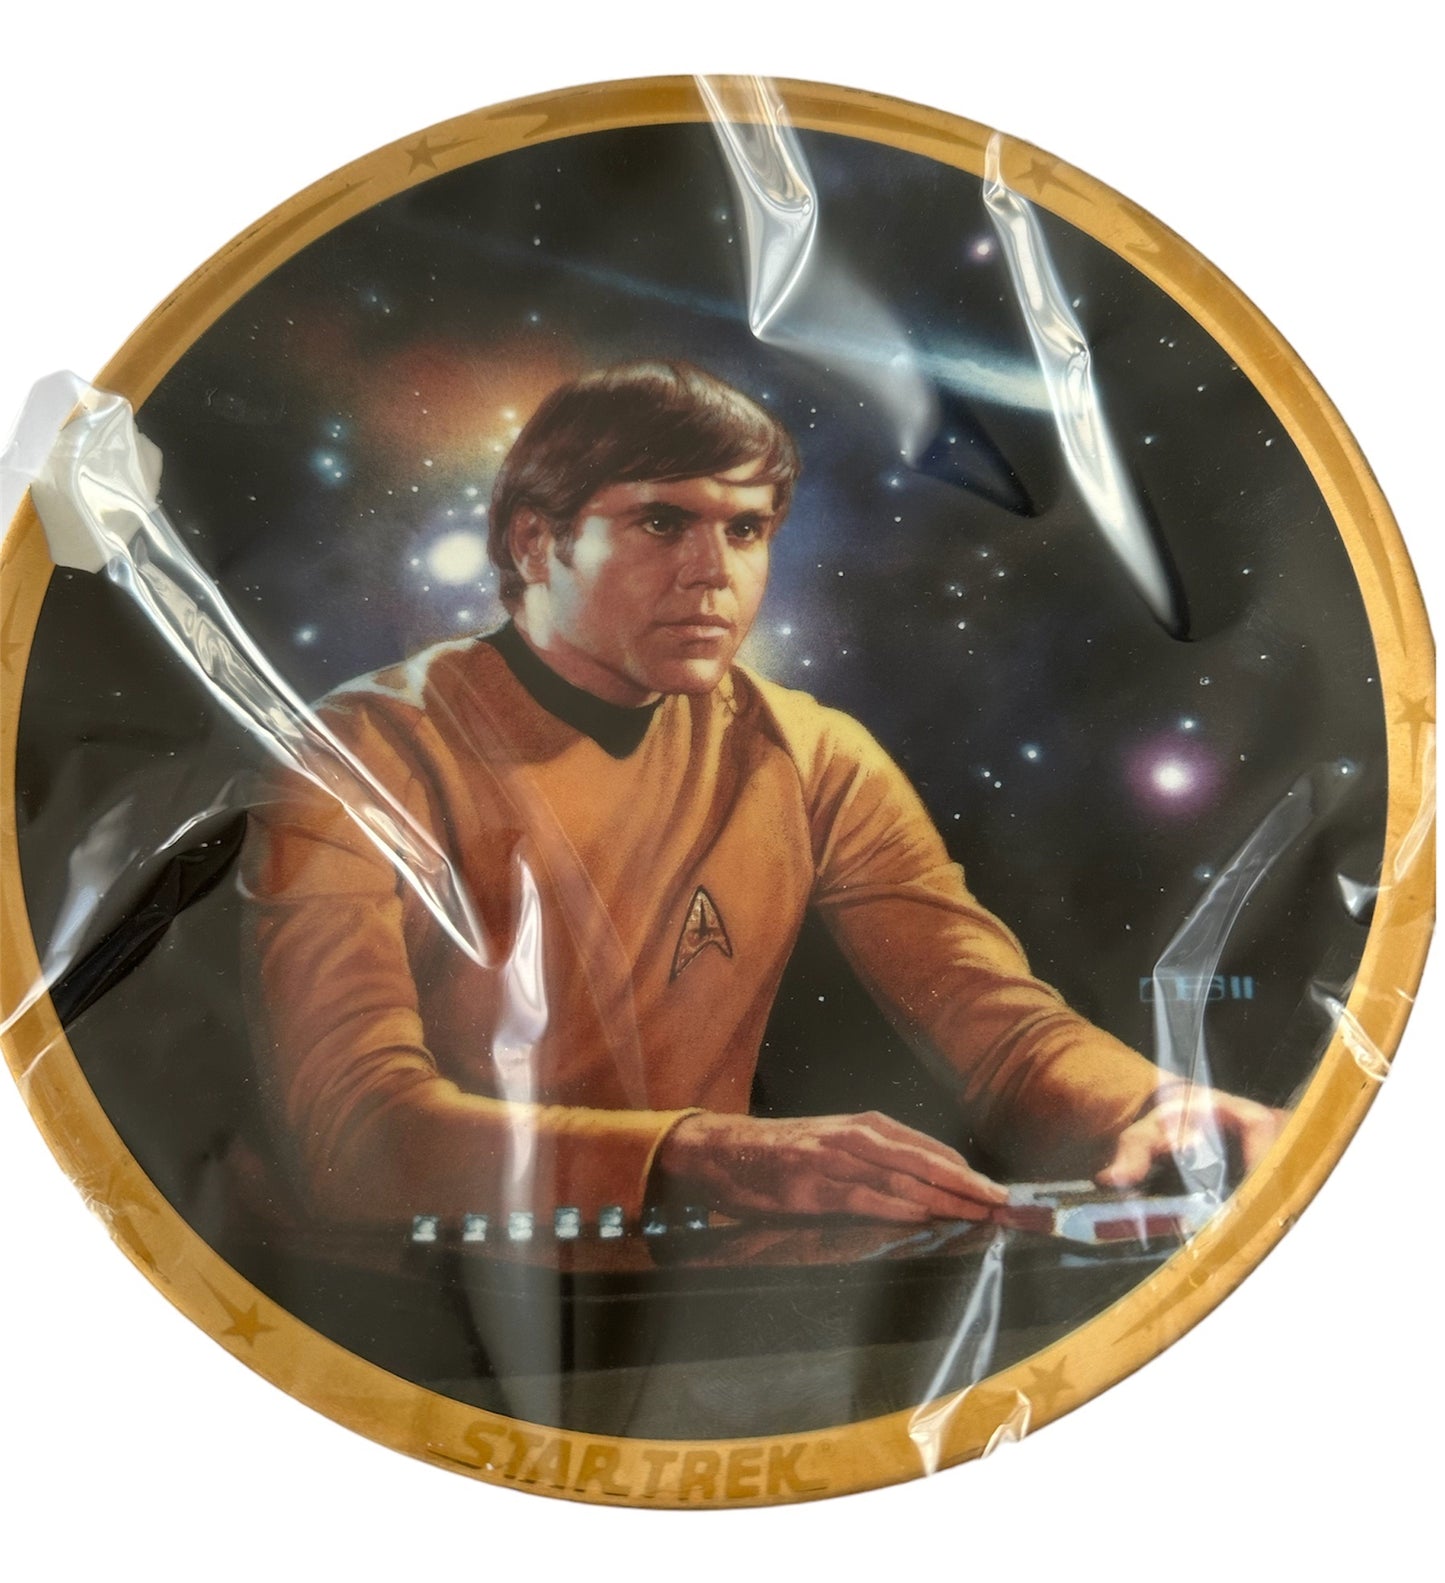 Vintage 1991 Star Trek The Original Series Pavel Chekov 25th Anniversary Commemorative Plate - Damage To Edge Of Rim